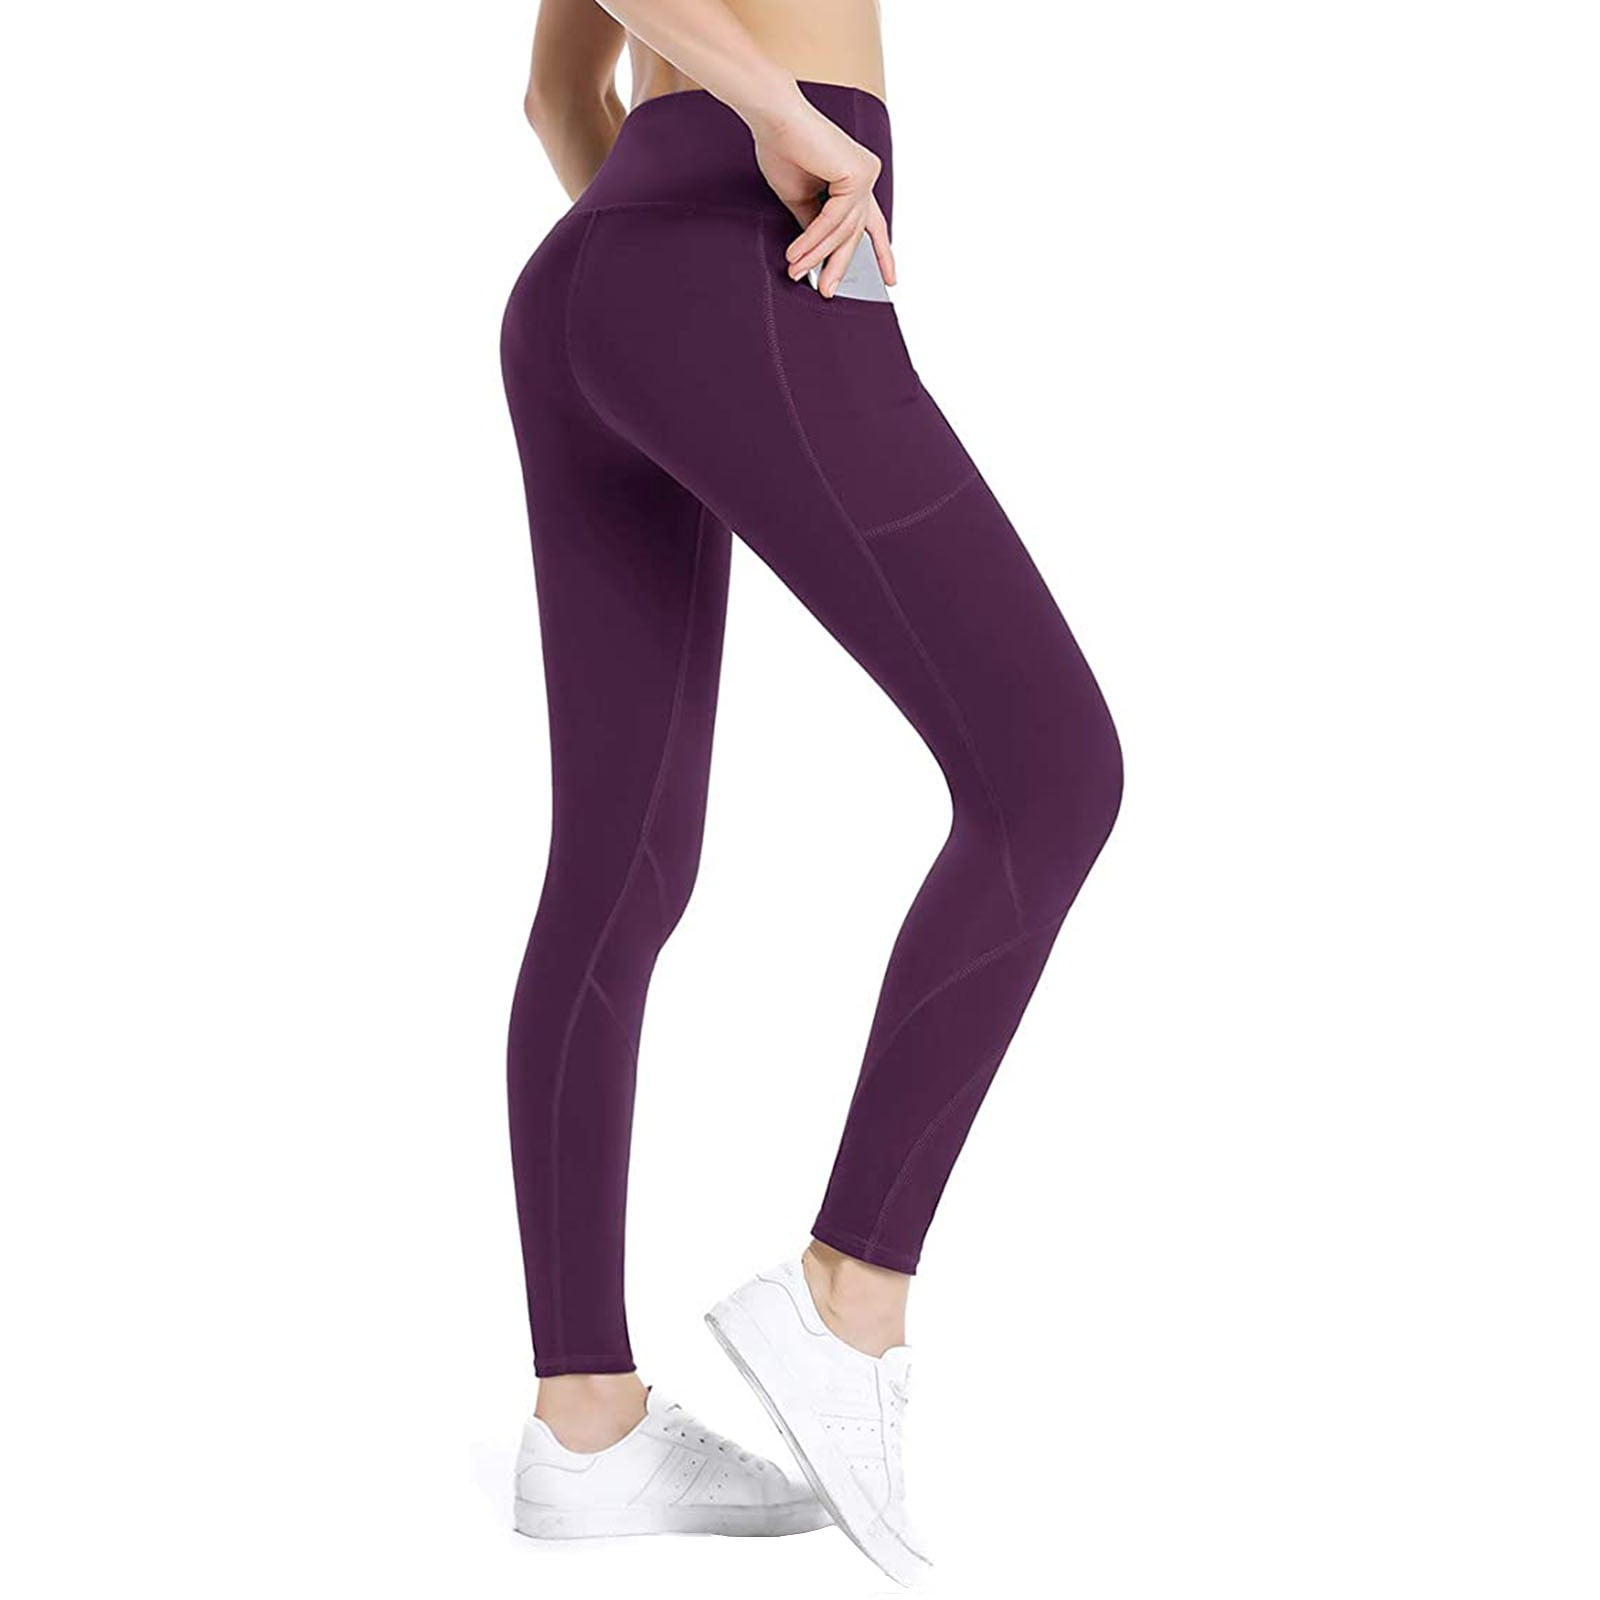 Women's Skinny Leggings Mesh Panel 4-way Stretch Sports Workout Breathable  Yoga Pants Black Small S2bl9